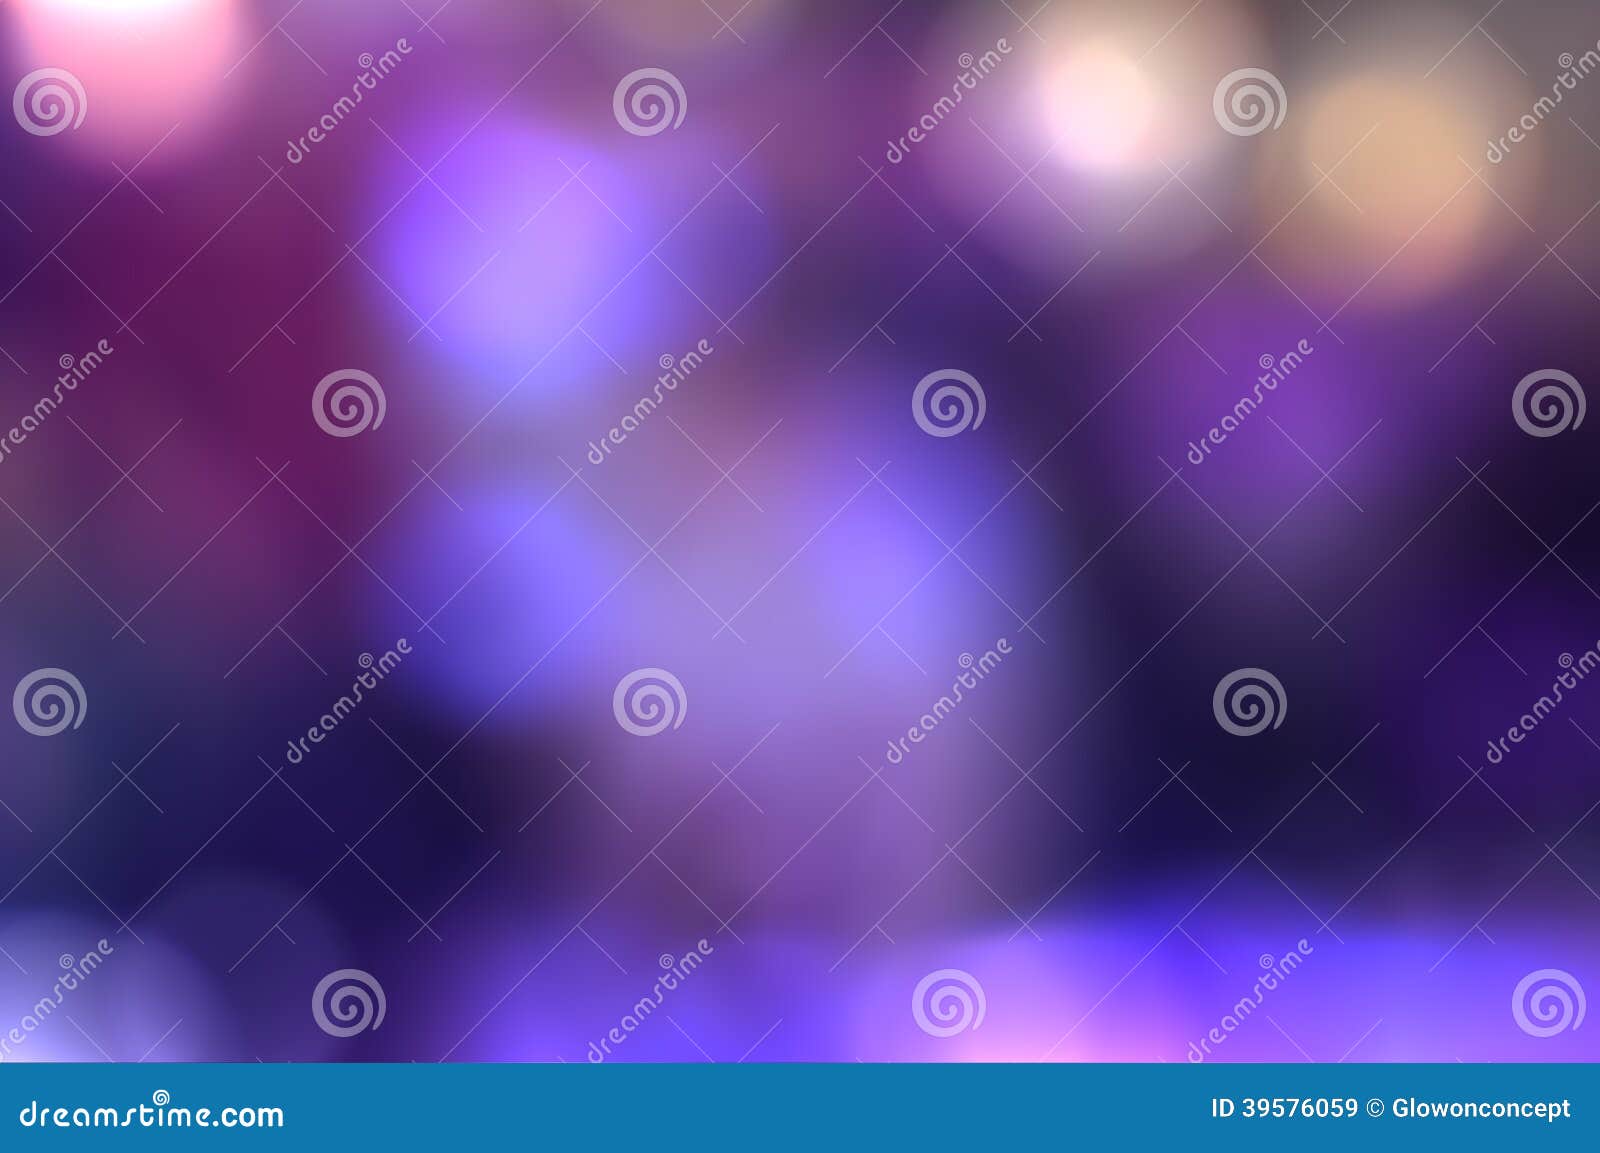 abstract blur purple light background